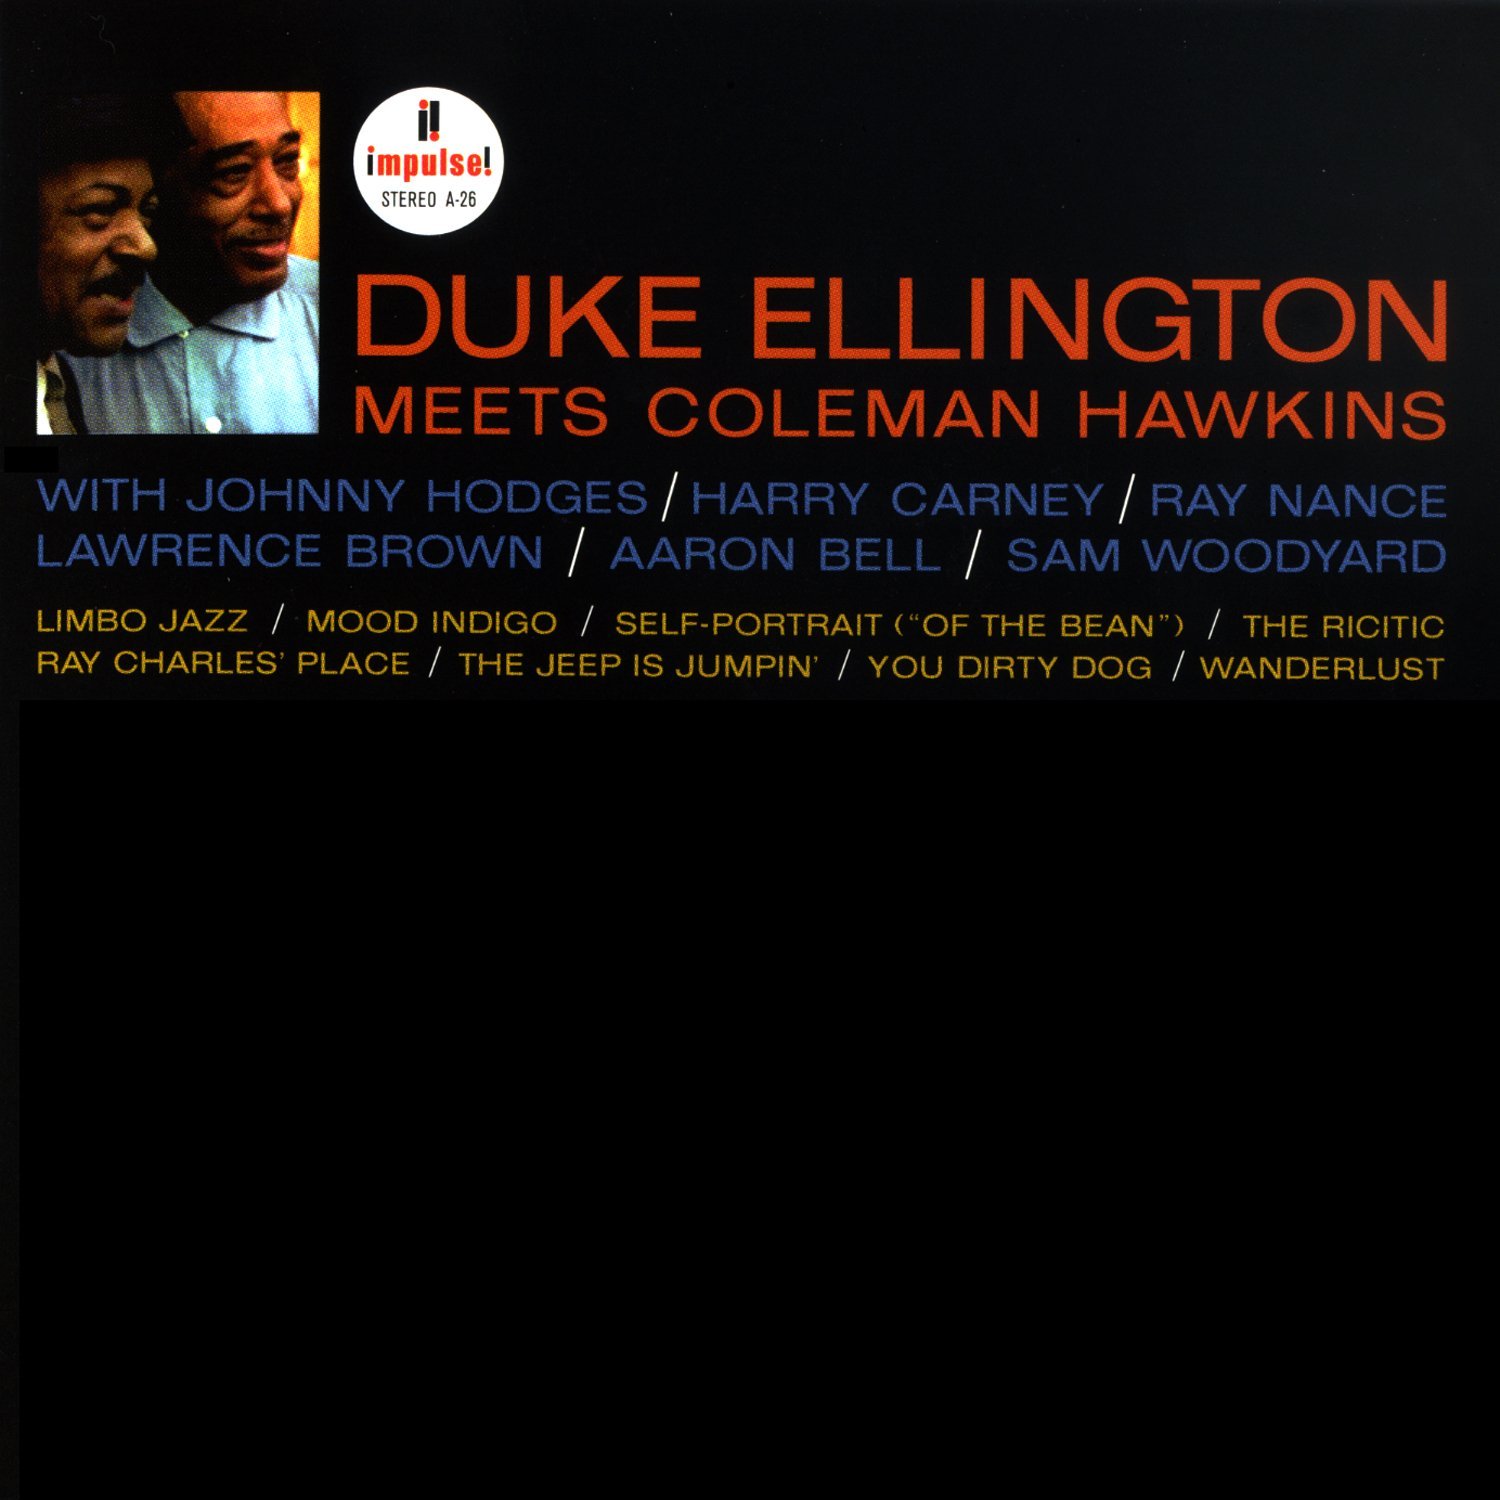 Duke Ellington And Coleman Hawkins – Duke Ellington Meets Coleman Hawkins (1963) [APO 2010] SACD ISO + Hi-Res FLAC